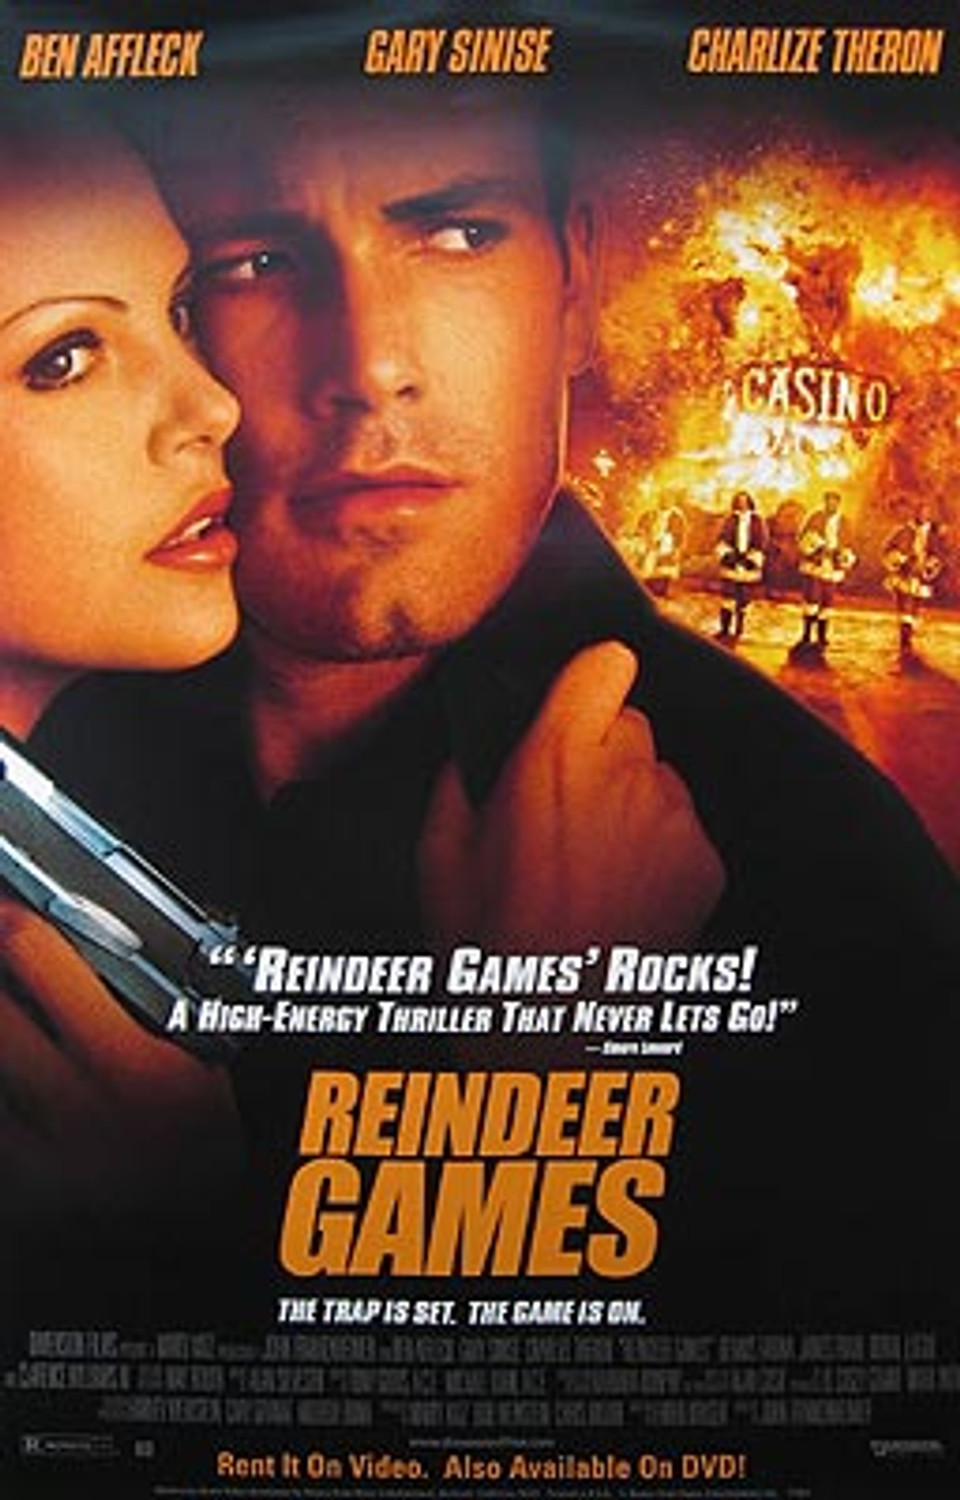 REINDEER GAMES movie (SSB2134-503086) posters Starstills.com buy (Video) POSTER at